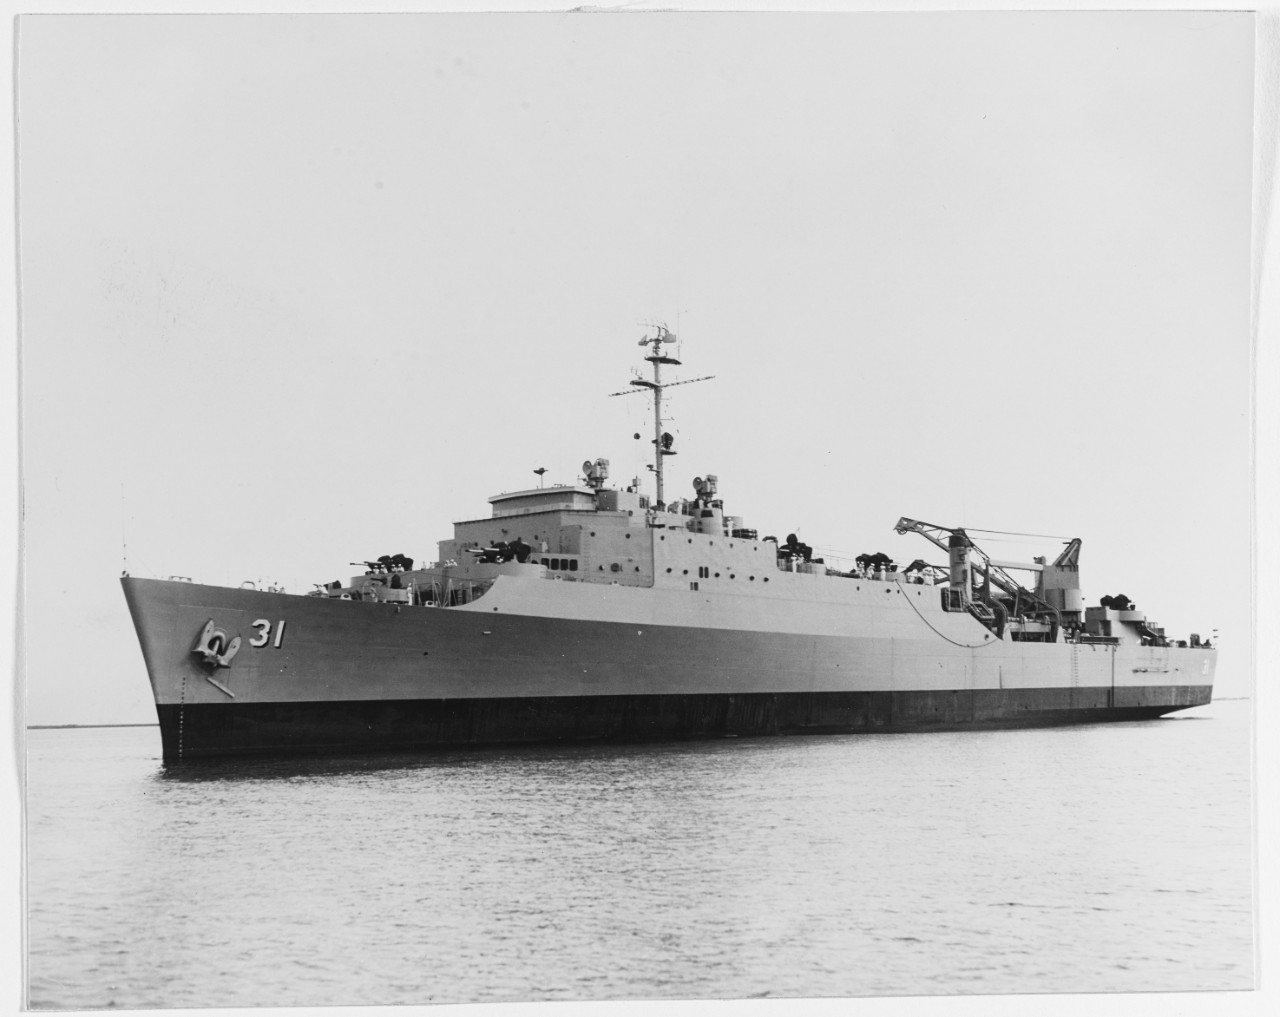 USS POINT DEFIANCE (LSD-31)